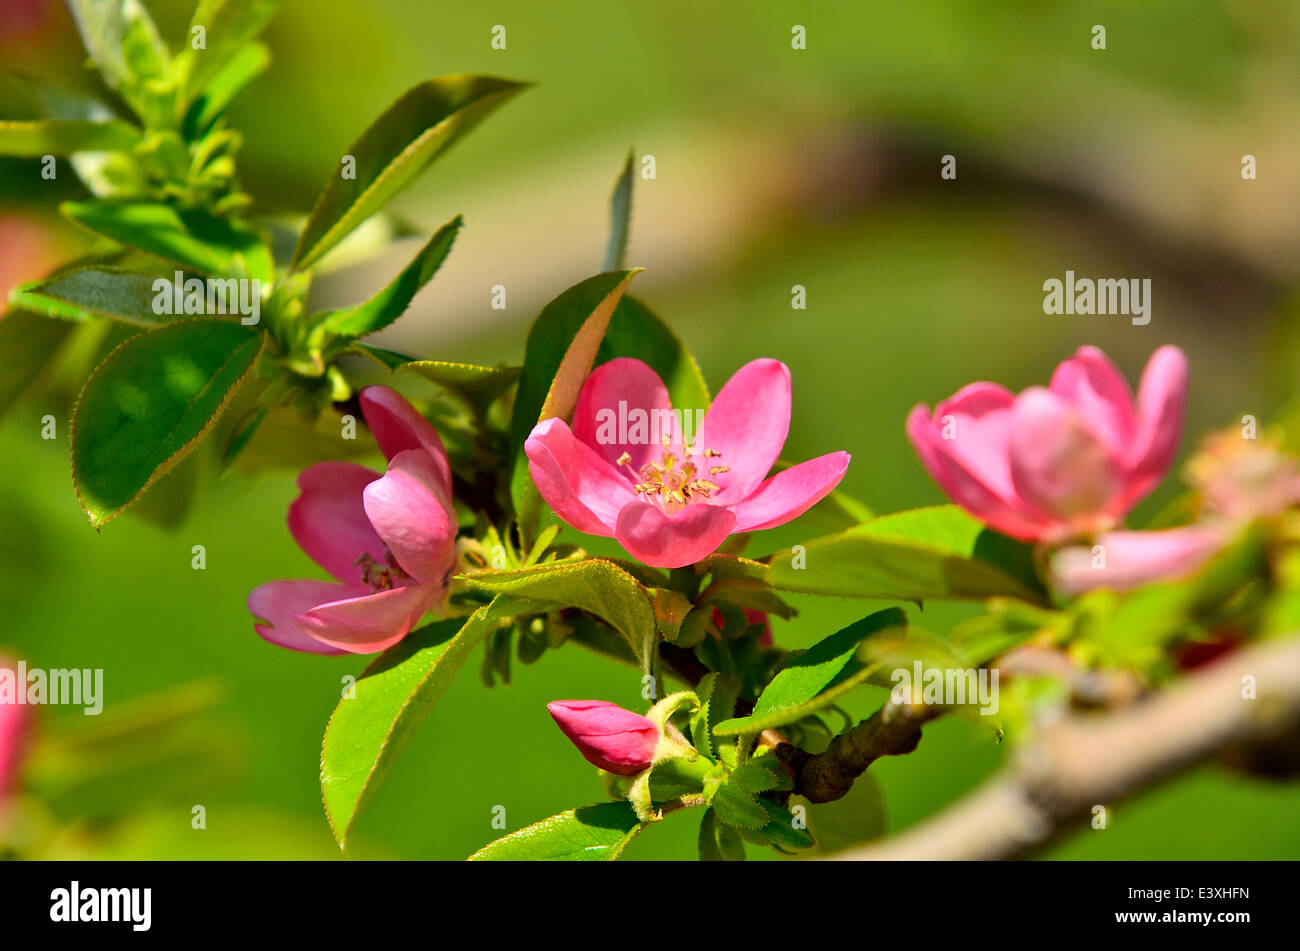 Flower close-up Stock Photo